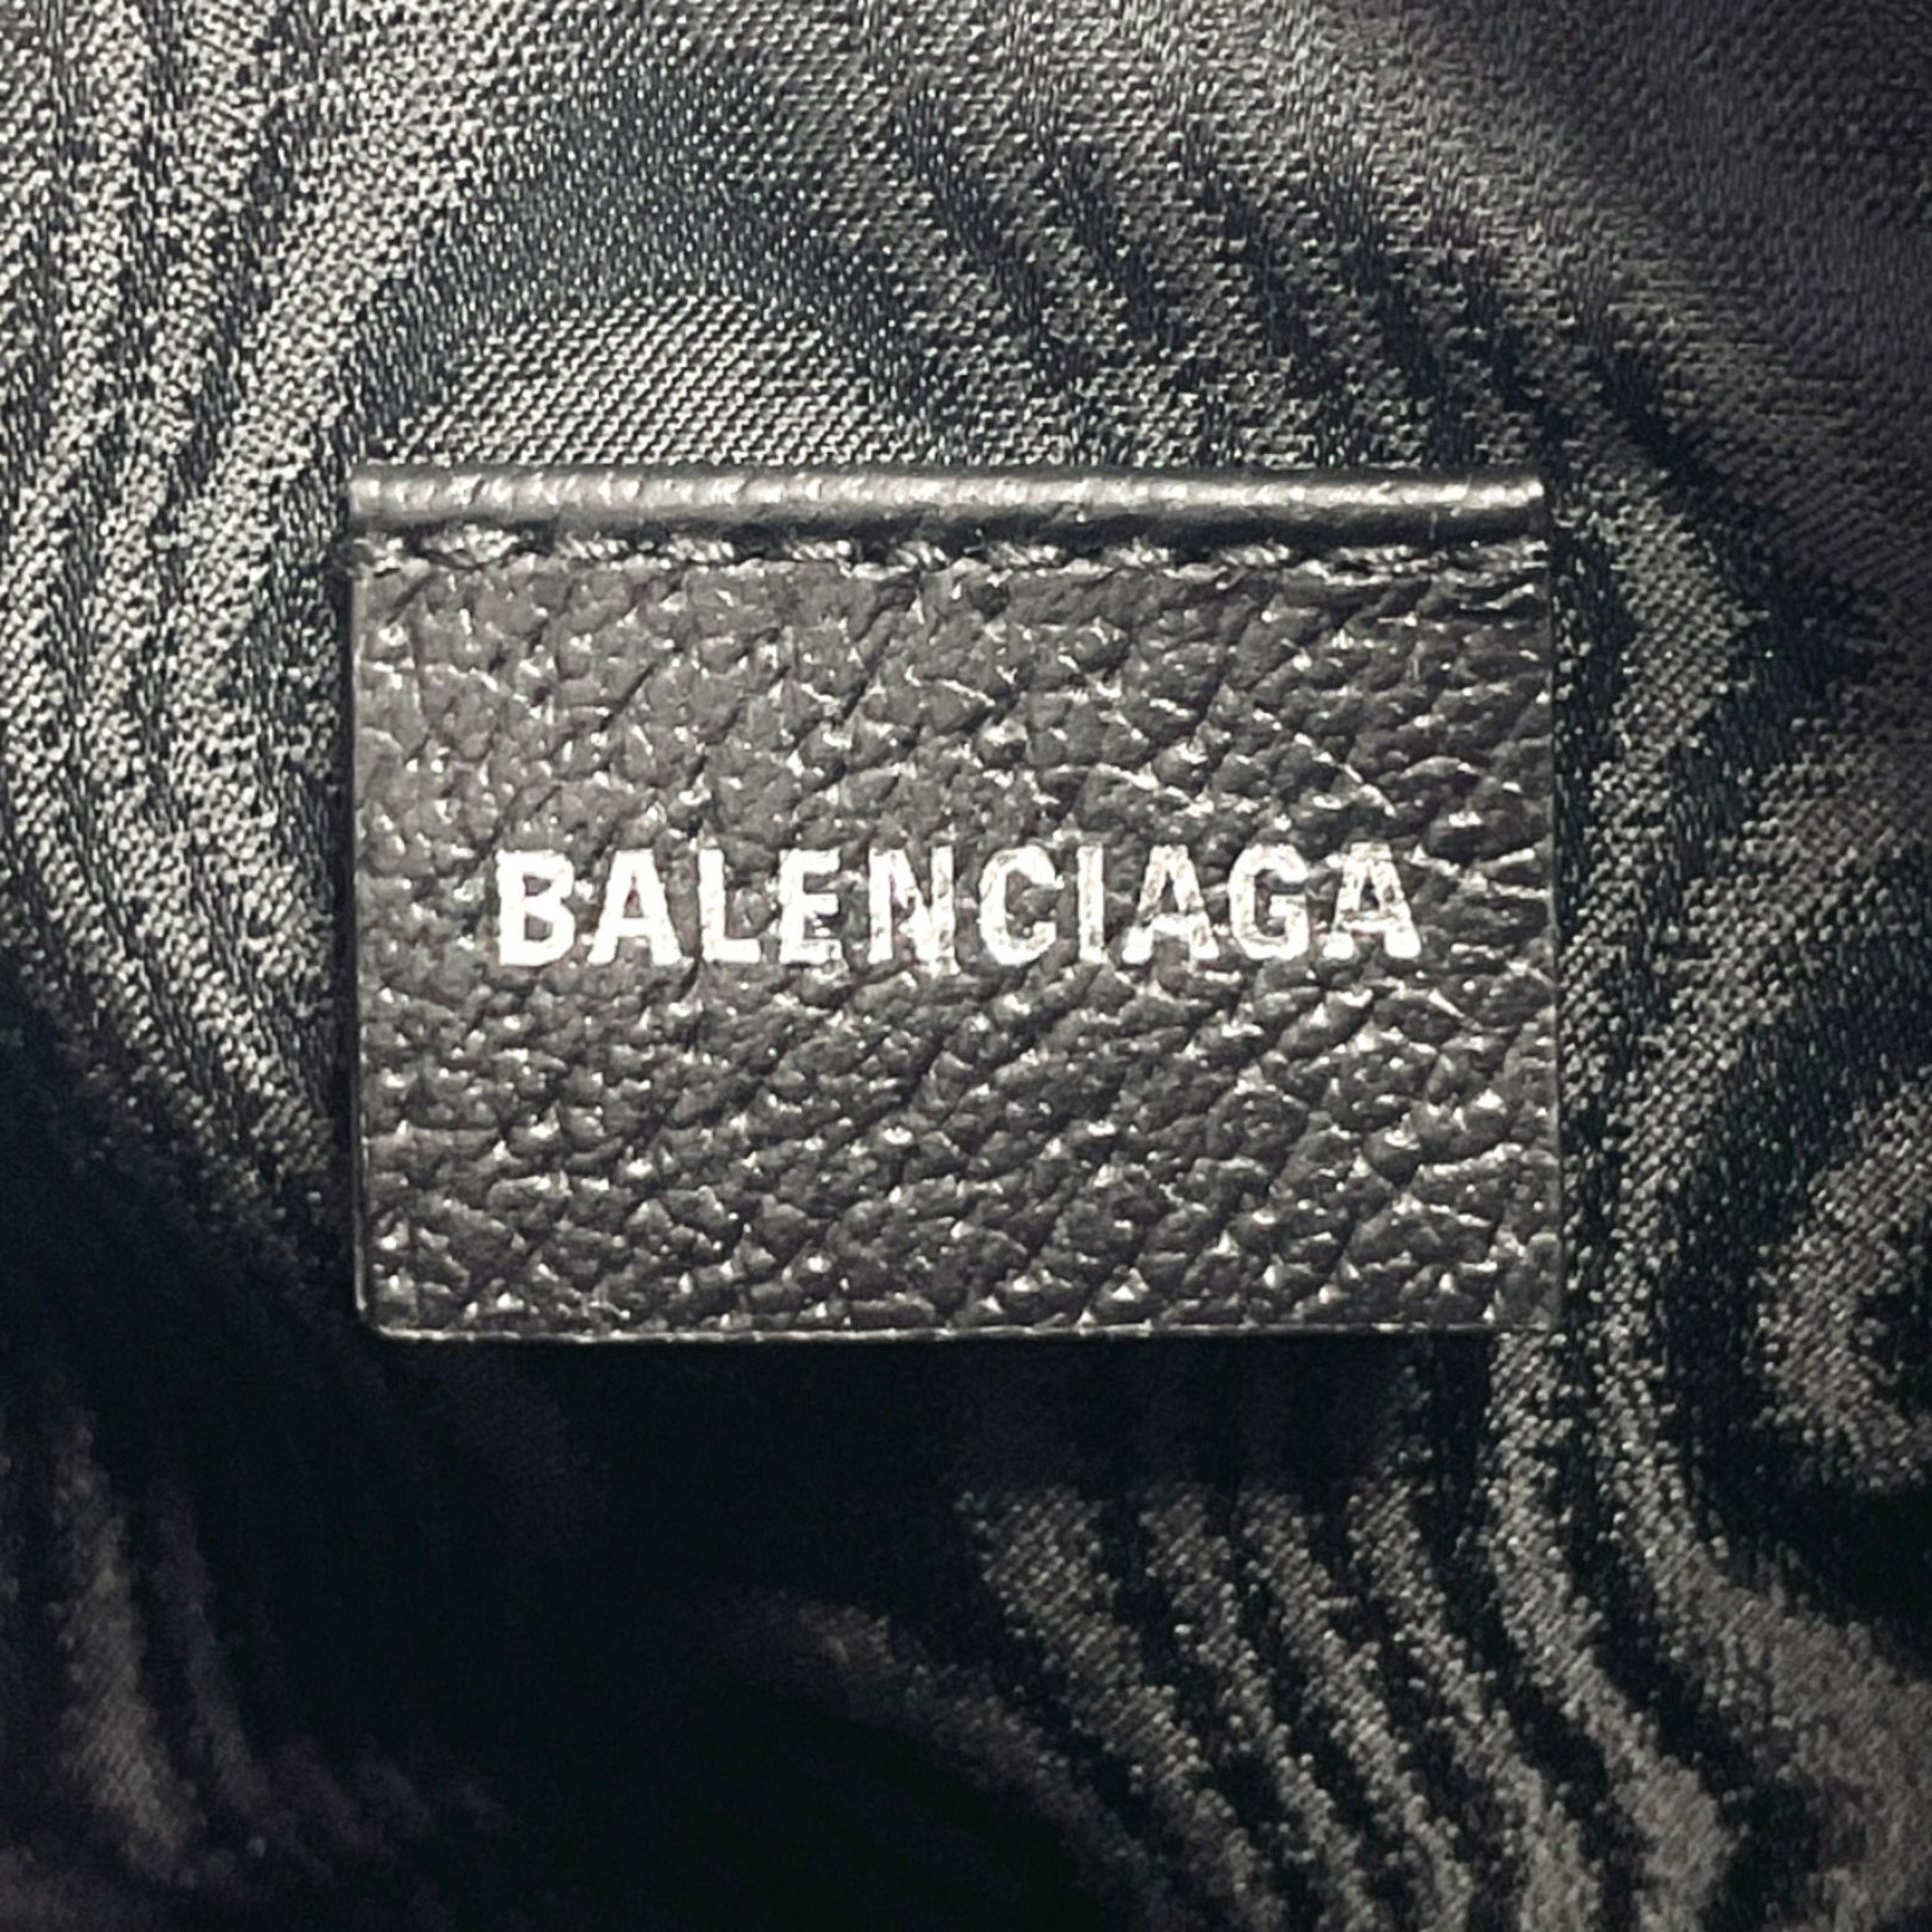 BALENCIAGA x GUCCI collaboration The Hacker Project 680129 Shoulder bag Canvas/Leather Black Unisex